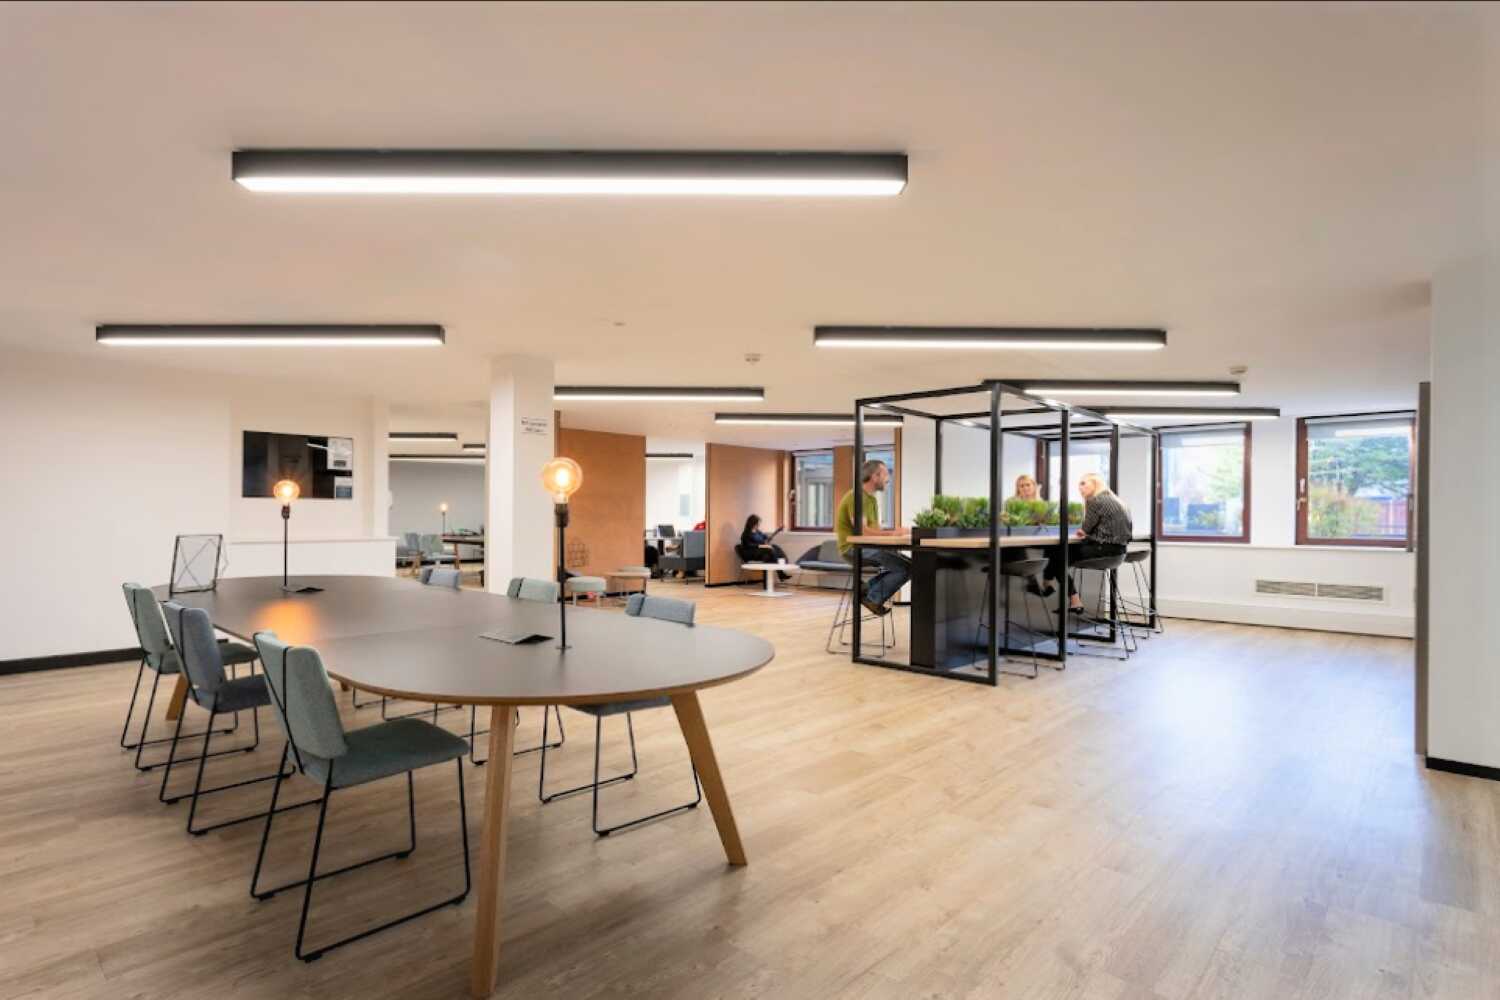 New flexible offices in Cambridge